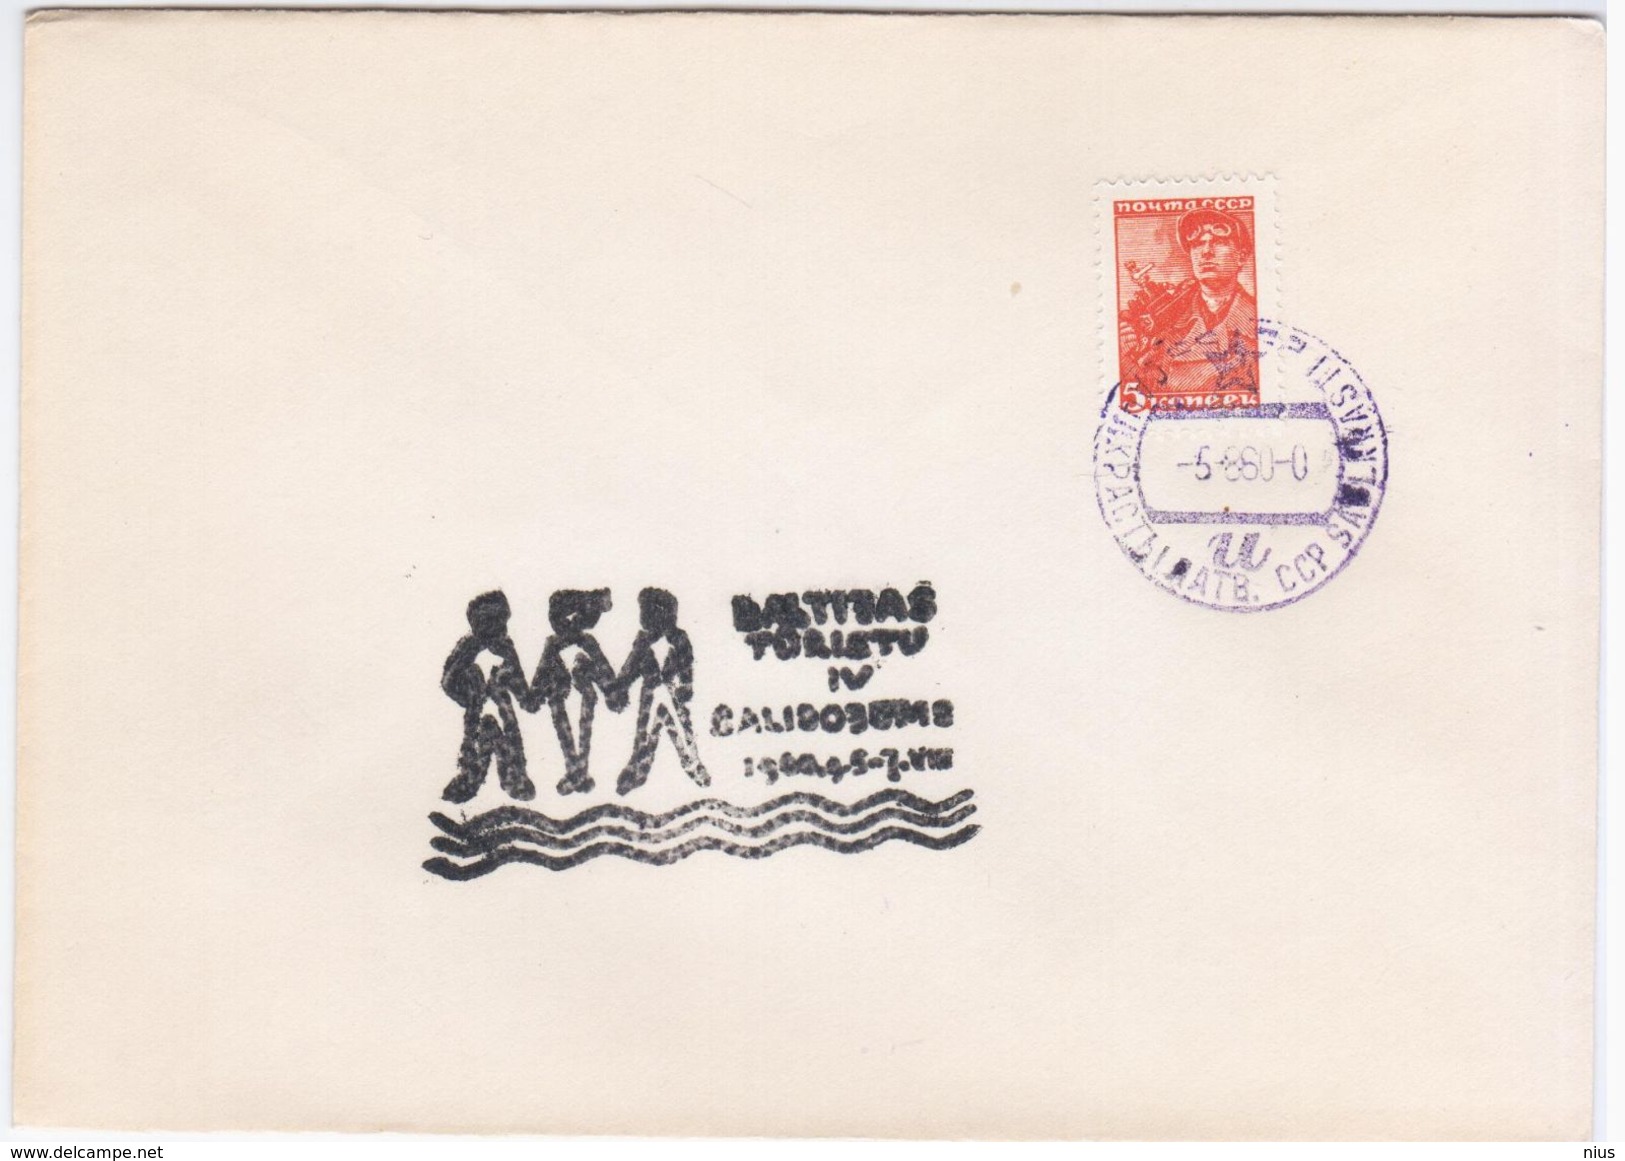 Latvia USSR 1960 TOURISM HEALTH CARE, Envelope, Canceled In Saulkrasti - Latvia